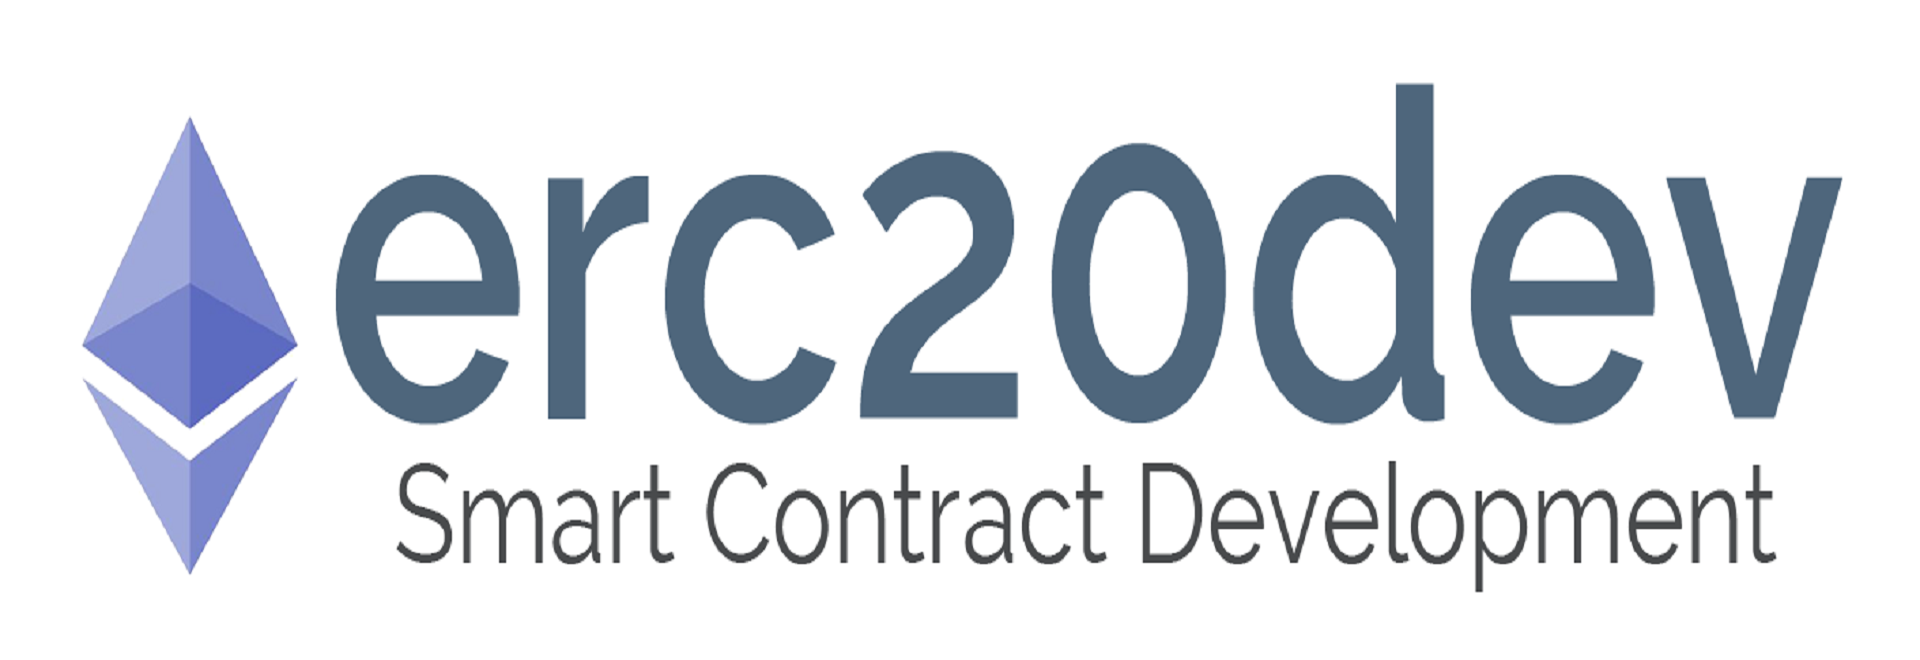 erc20 smart comtract development - صفحه اصلی